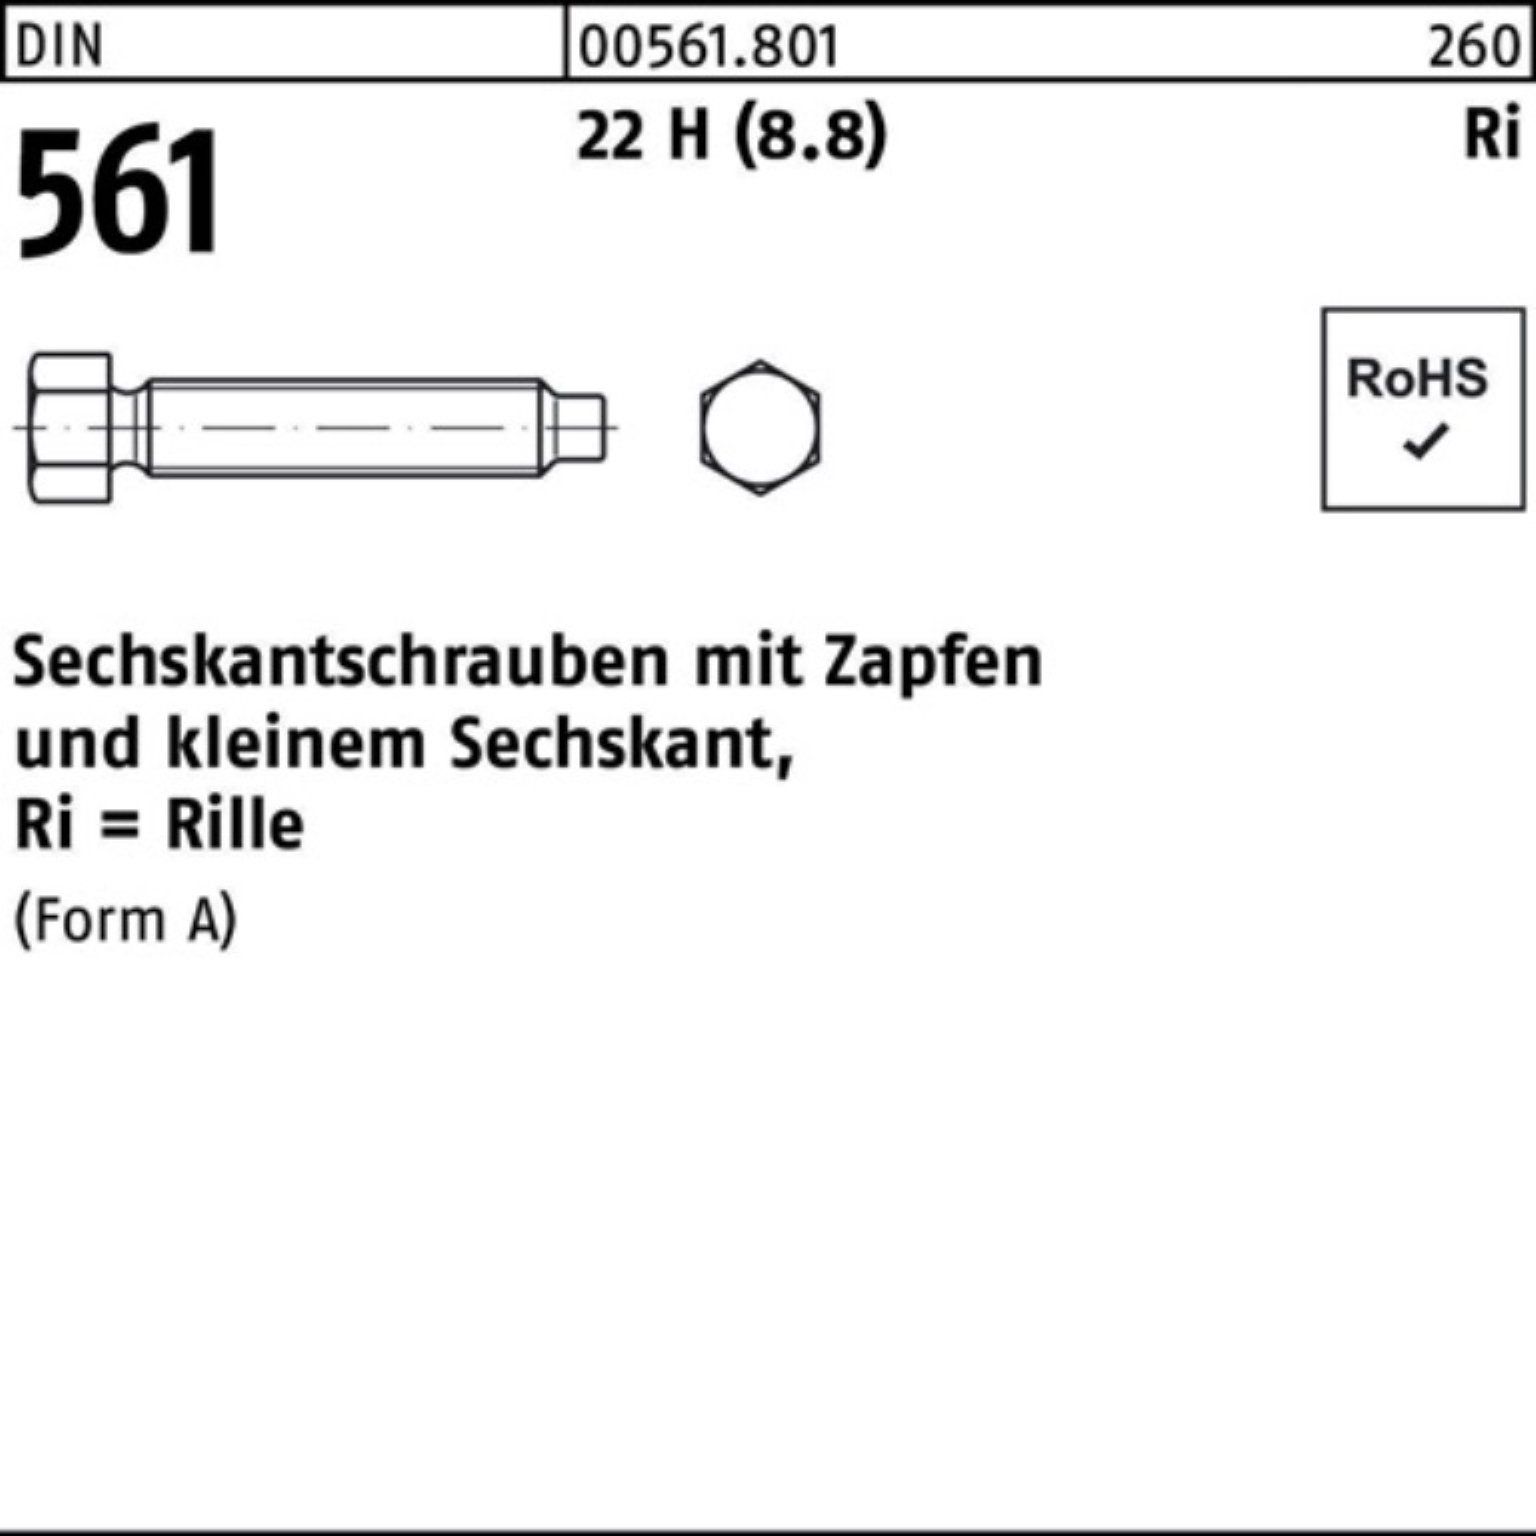 Reyher Sechskantschraube Pack AM 8x H 40 DIN St Zapfen 22 Sechskantschraube 100 (8.8) 561 100er